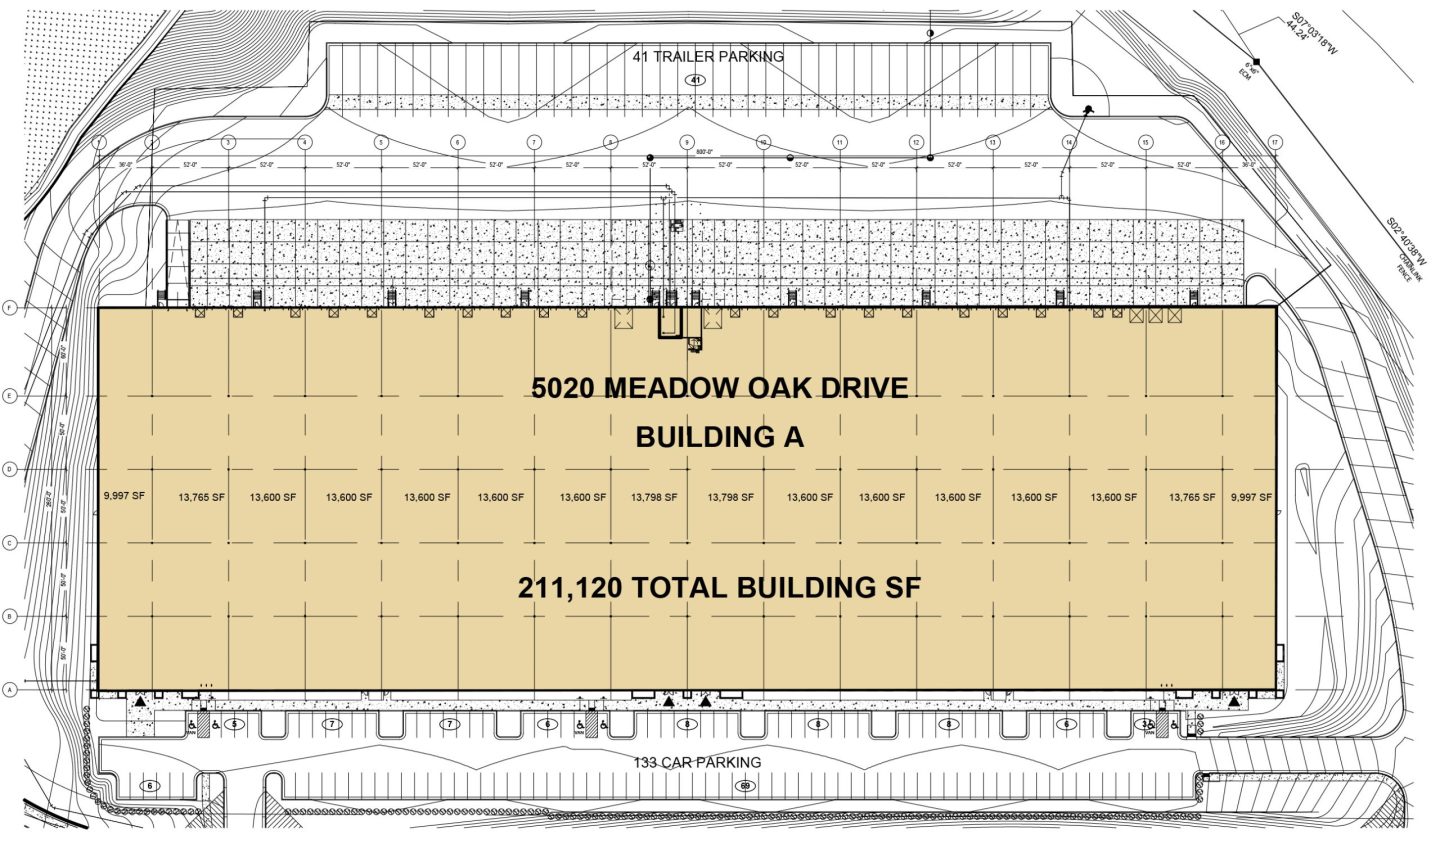 Meadow Oak Commerce Center A - Photos and floorplans